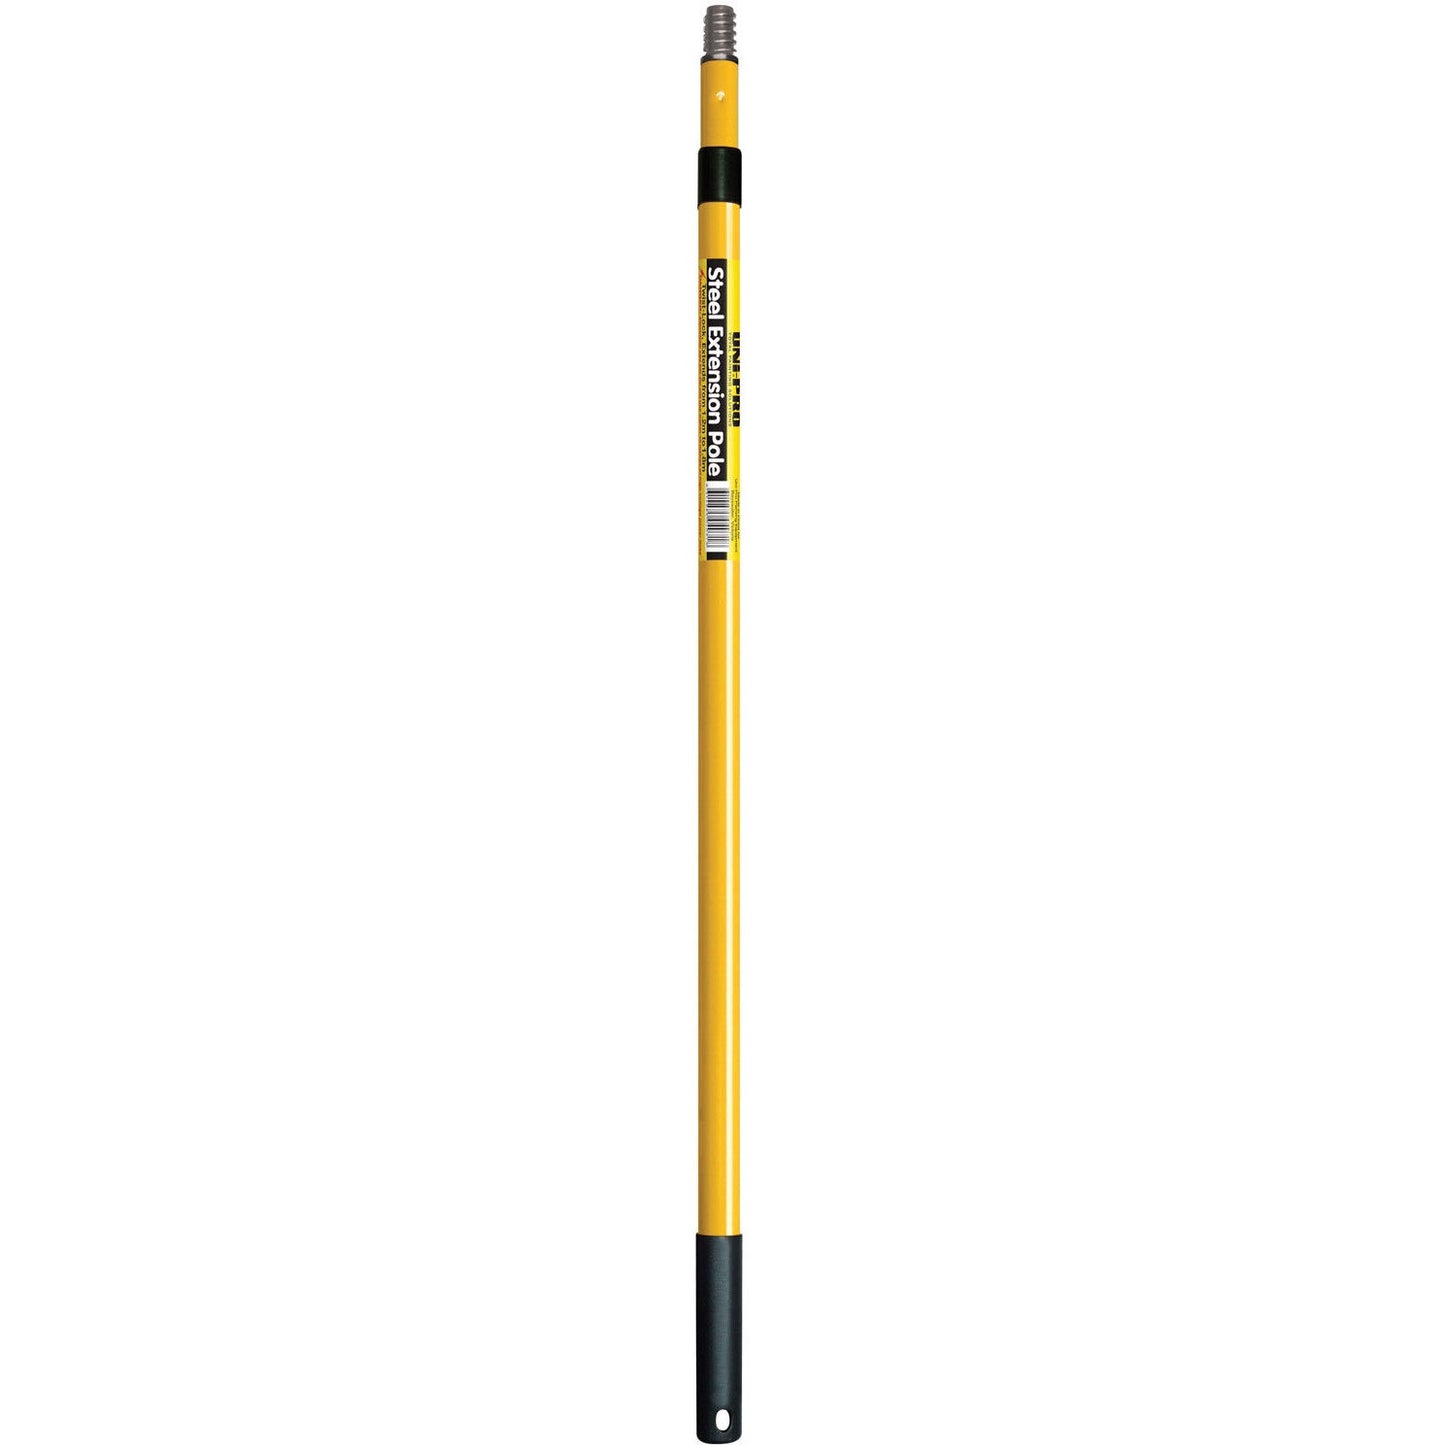 UPO Pole Ext Yellow Twist 1.0-1.8m